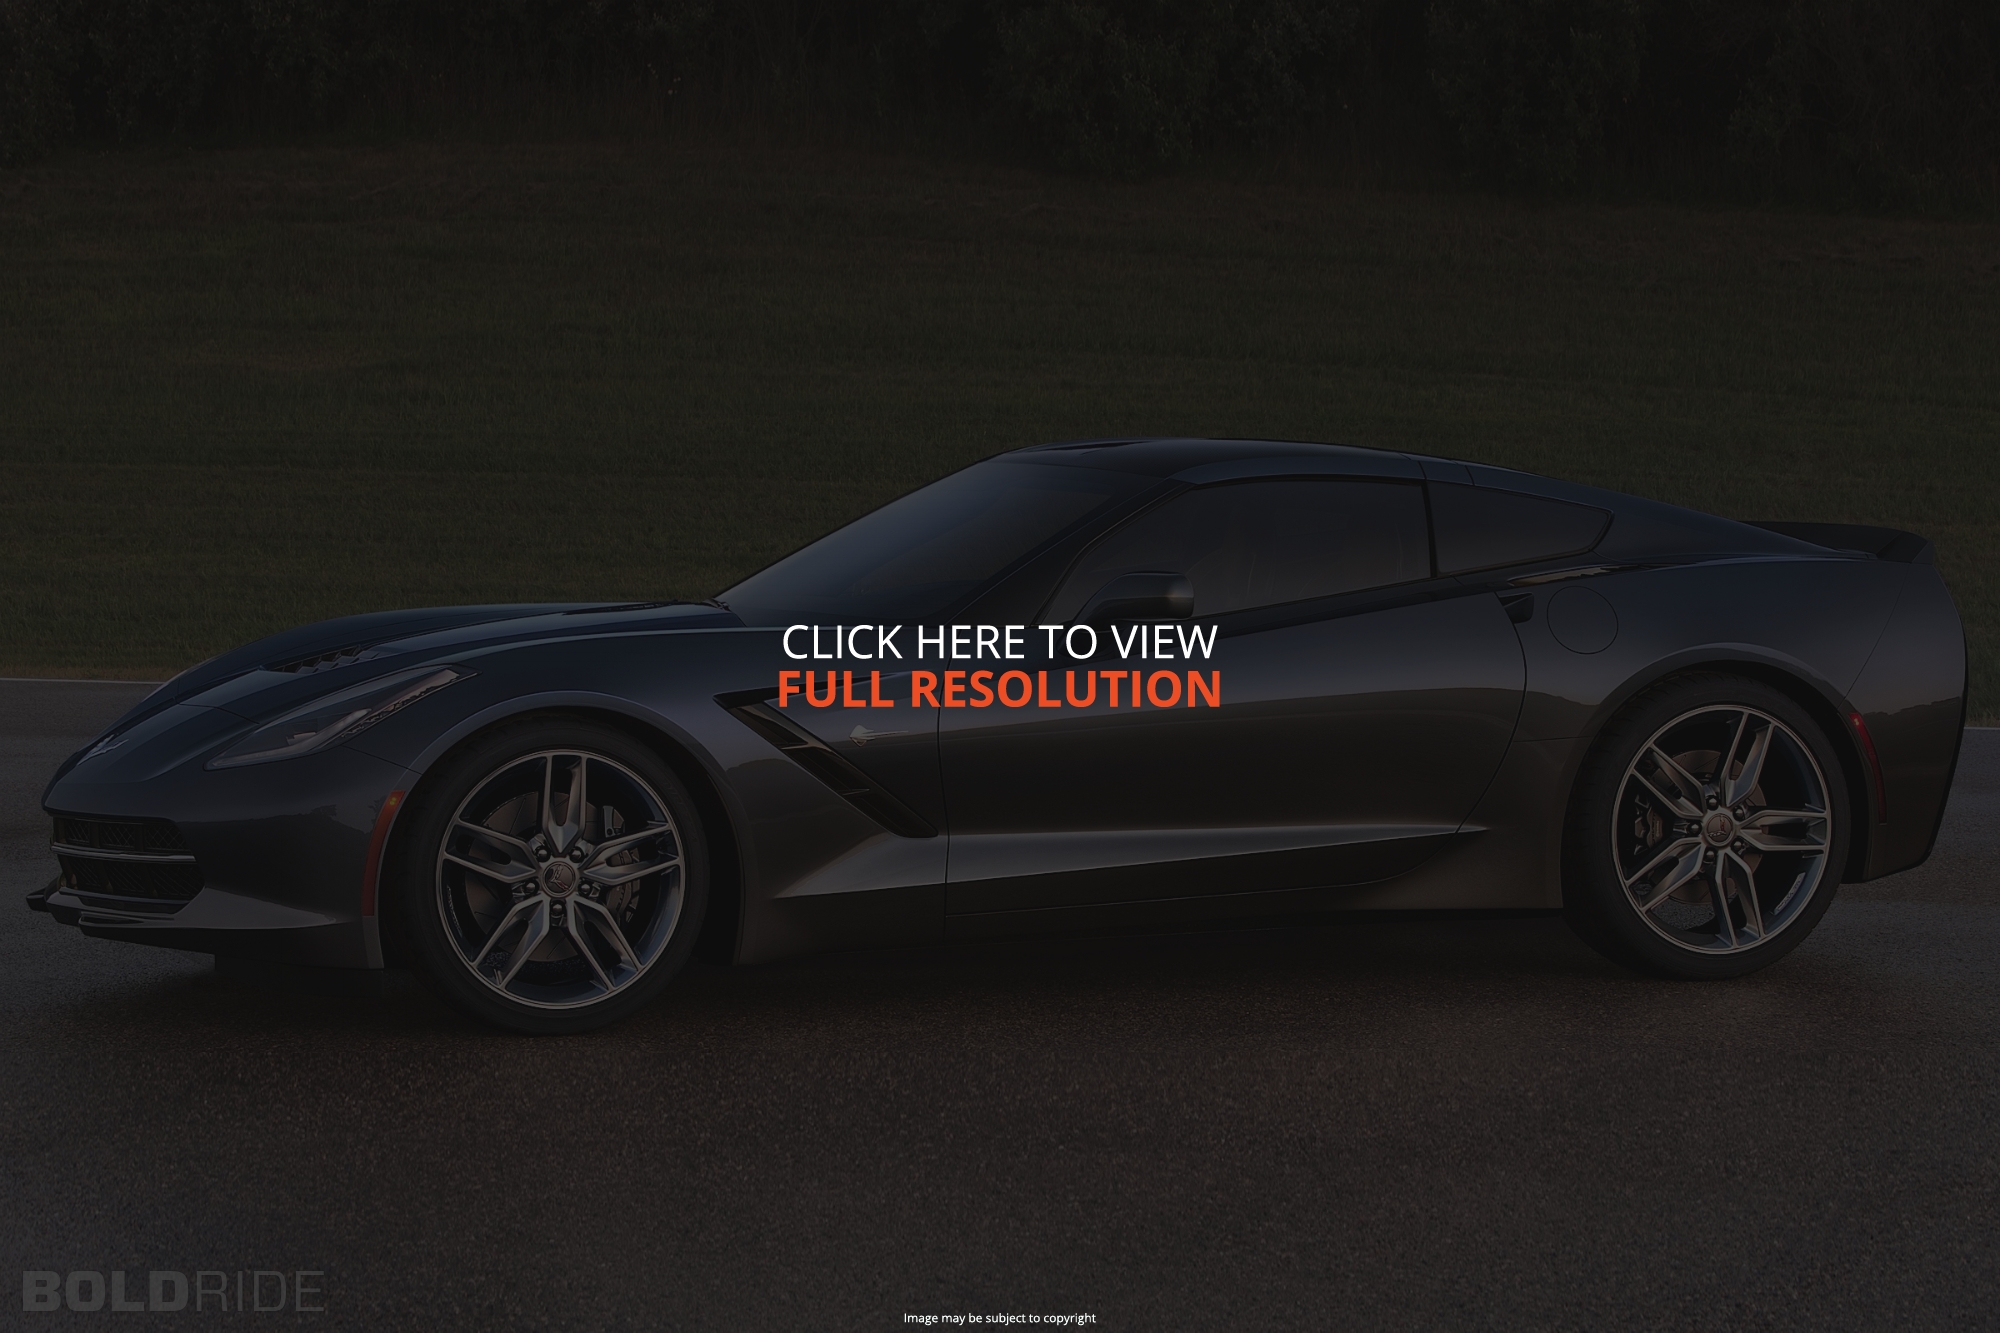 2014 Corvette Stingray #2